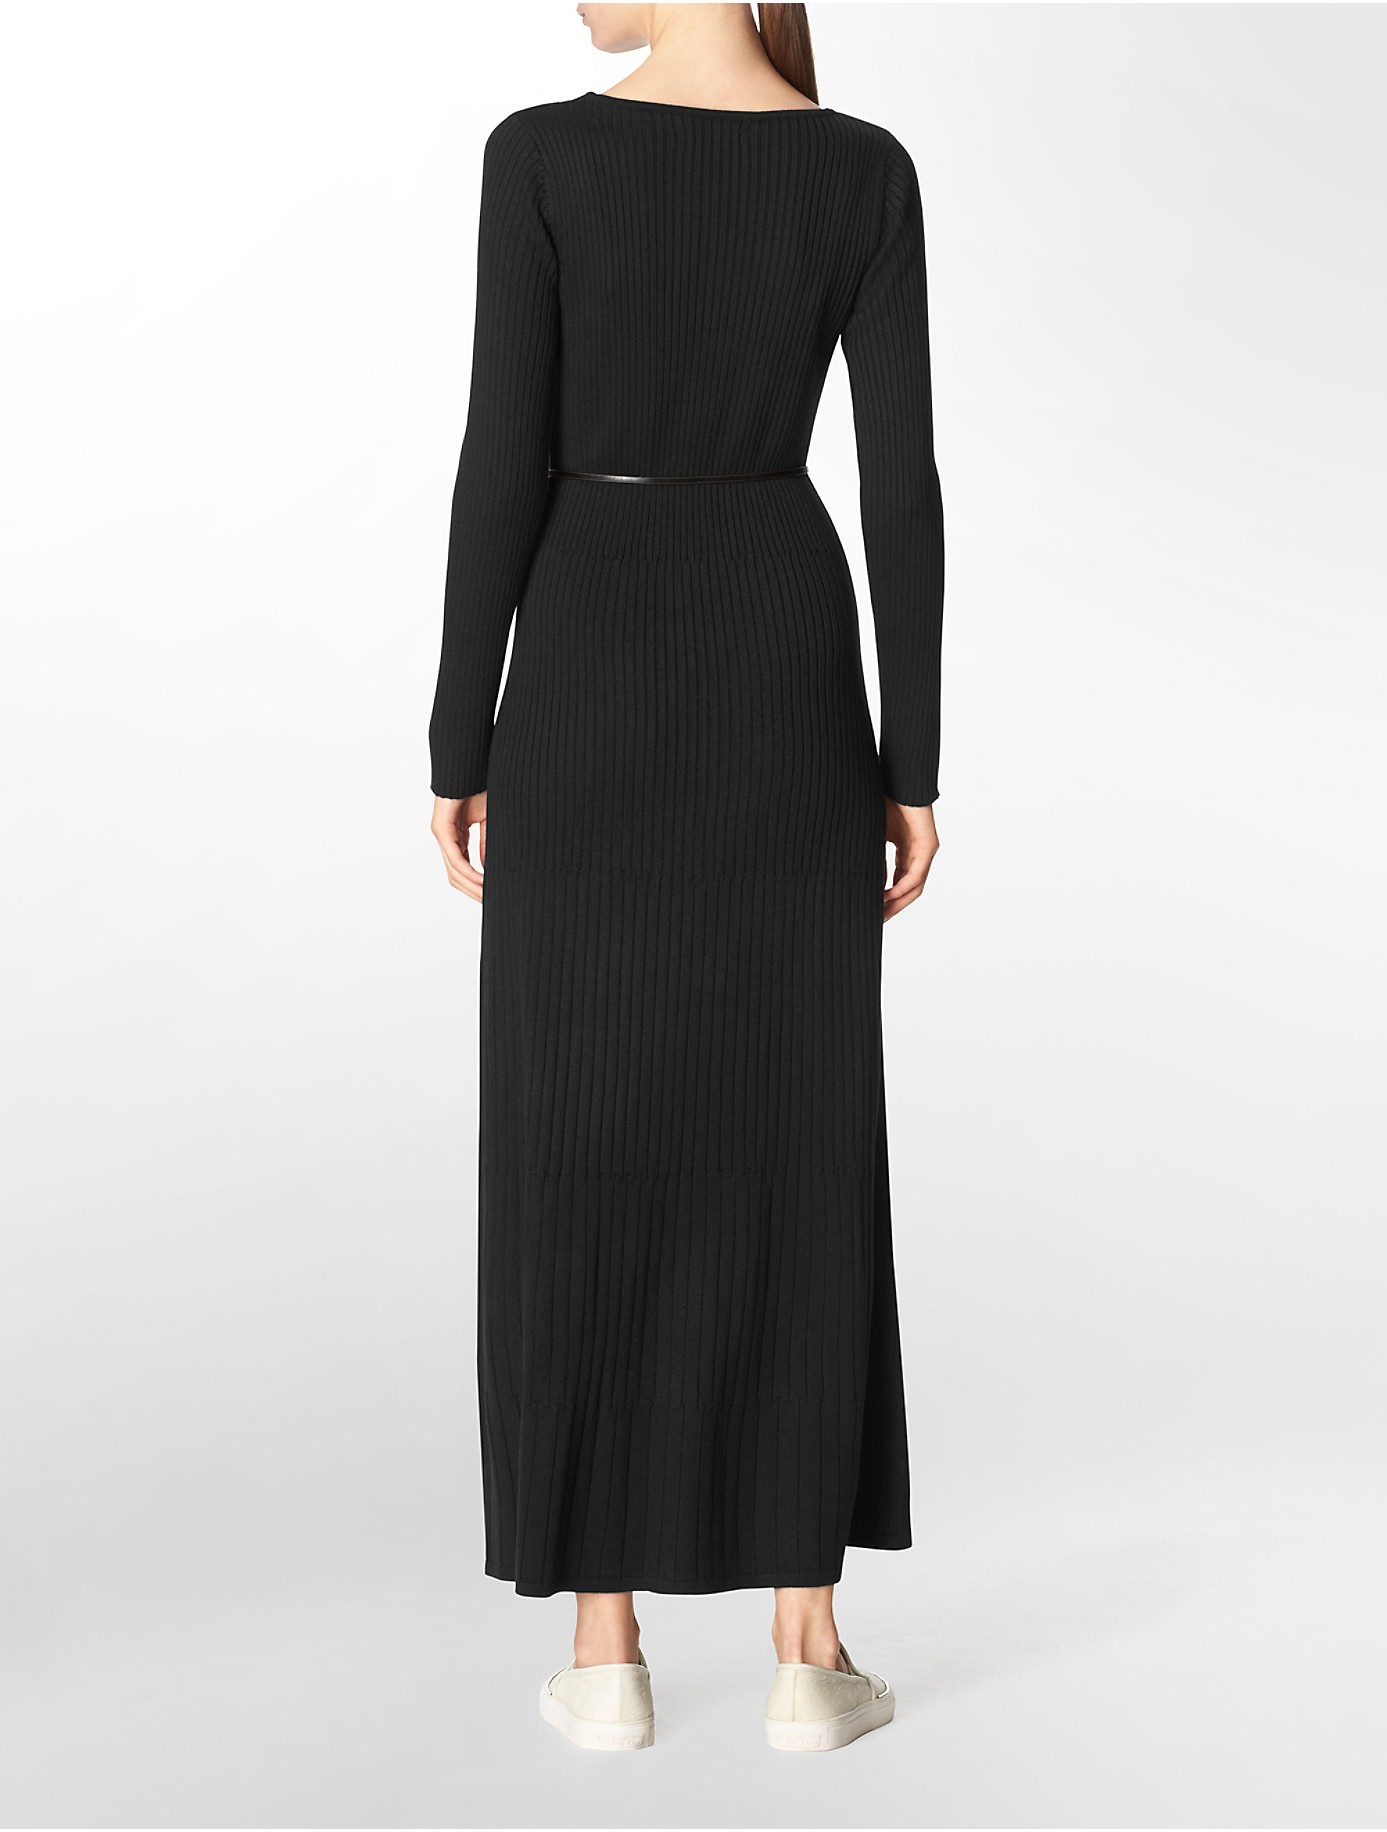 Lyst - Calvin klein Rib Knit Belted Maxi Dress in Black